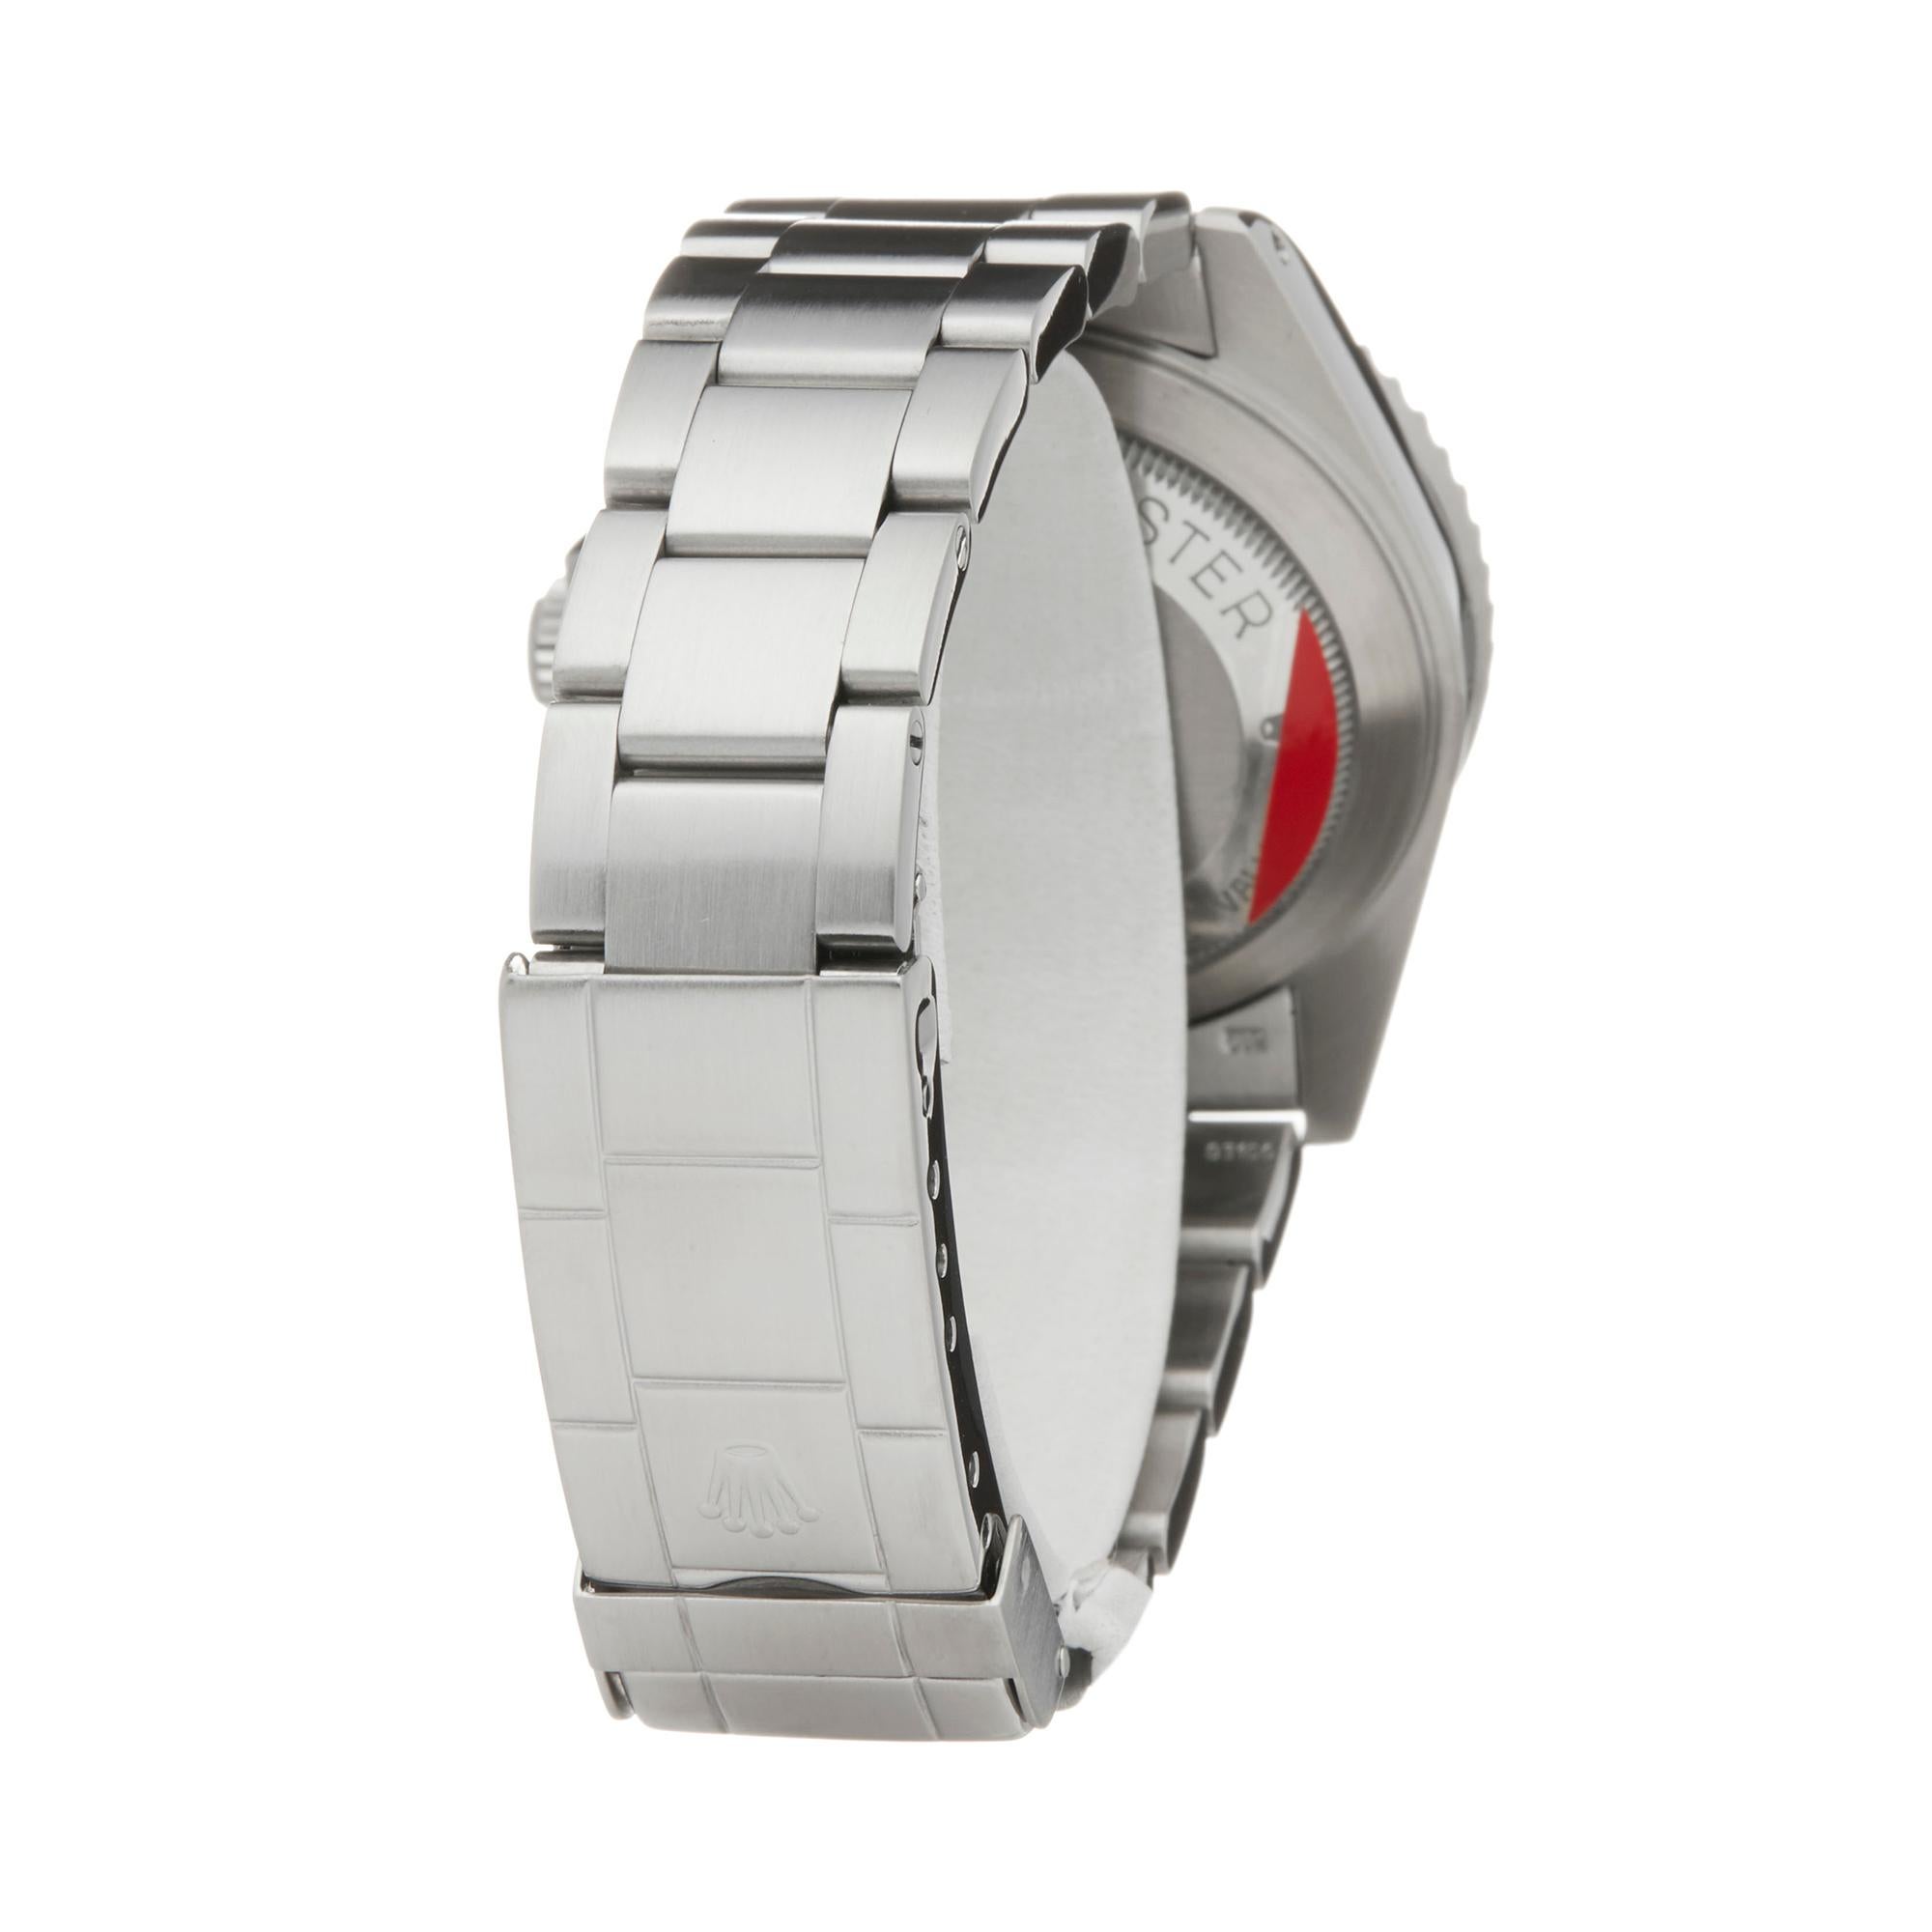 Rolex Sea-Dweller Stainless Steel 16660 Wristwatch 2